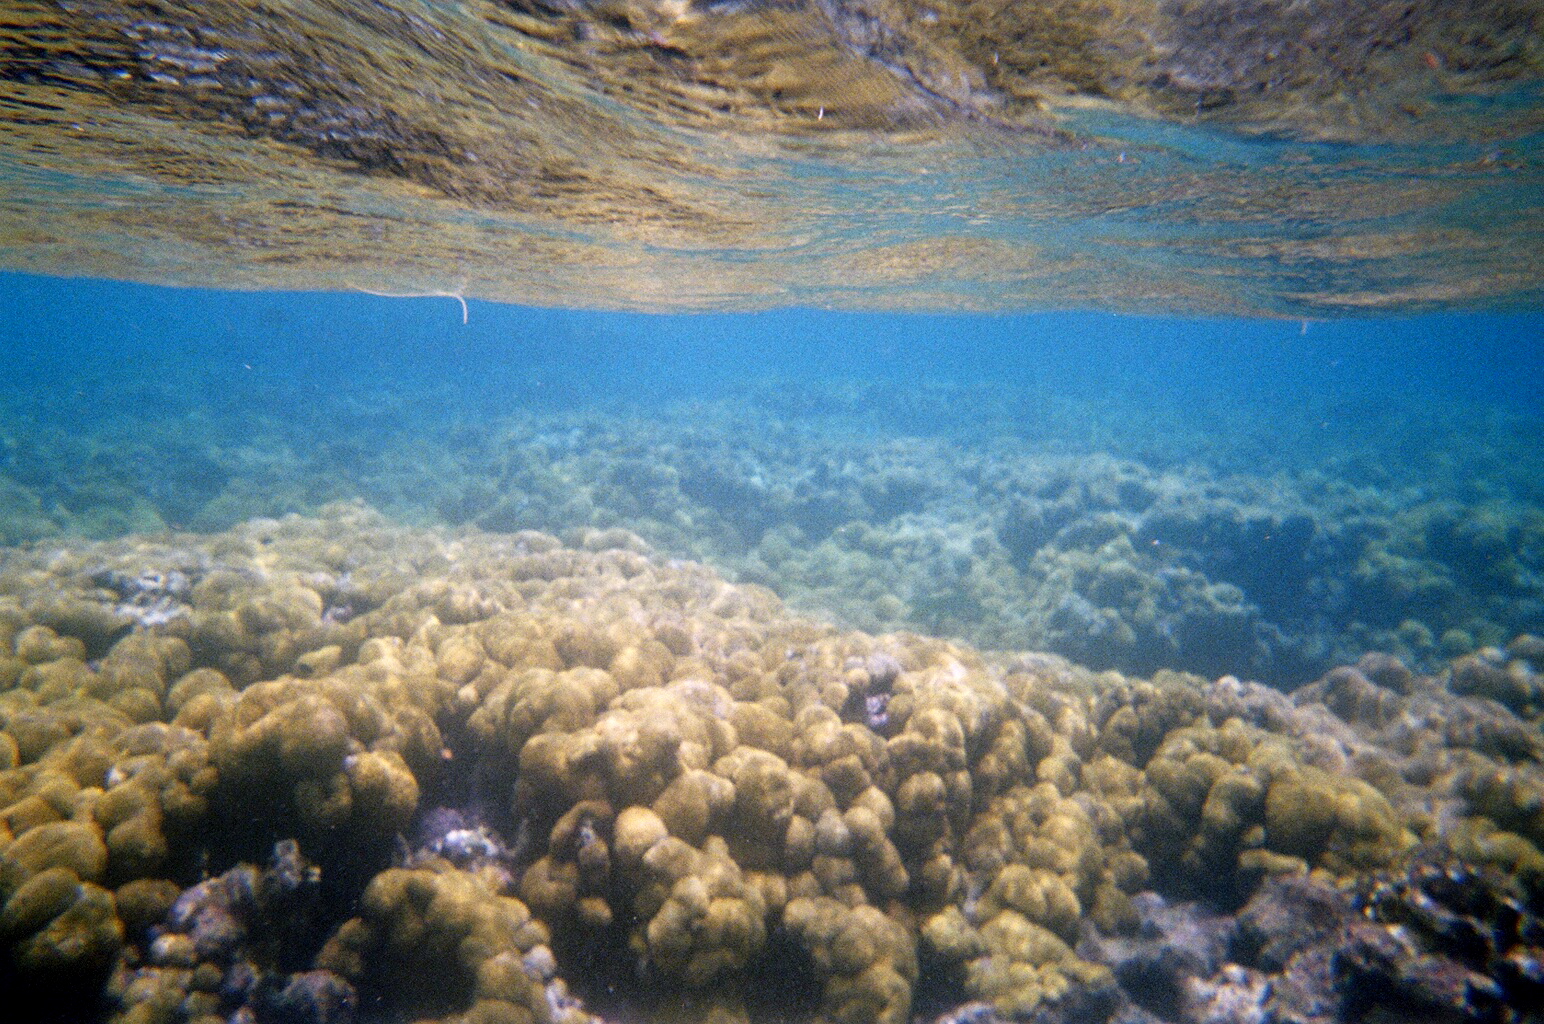 Looe Key Reef